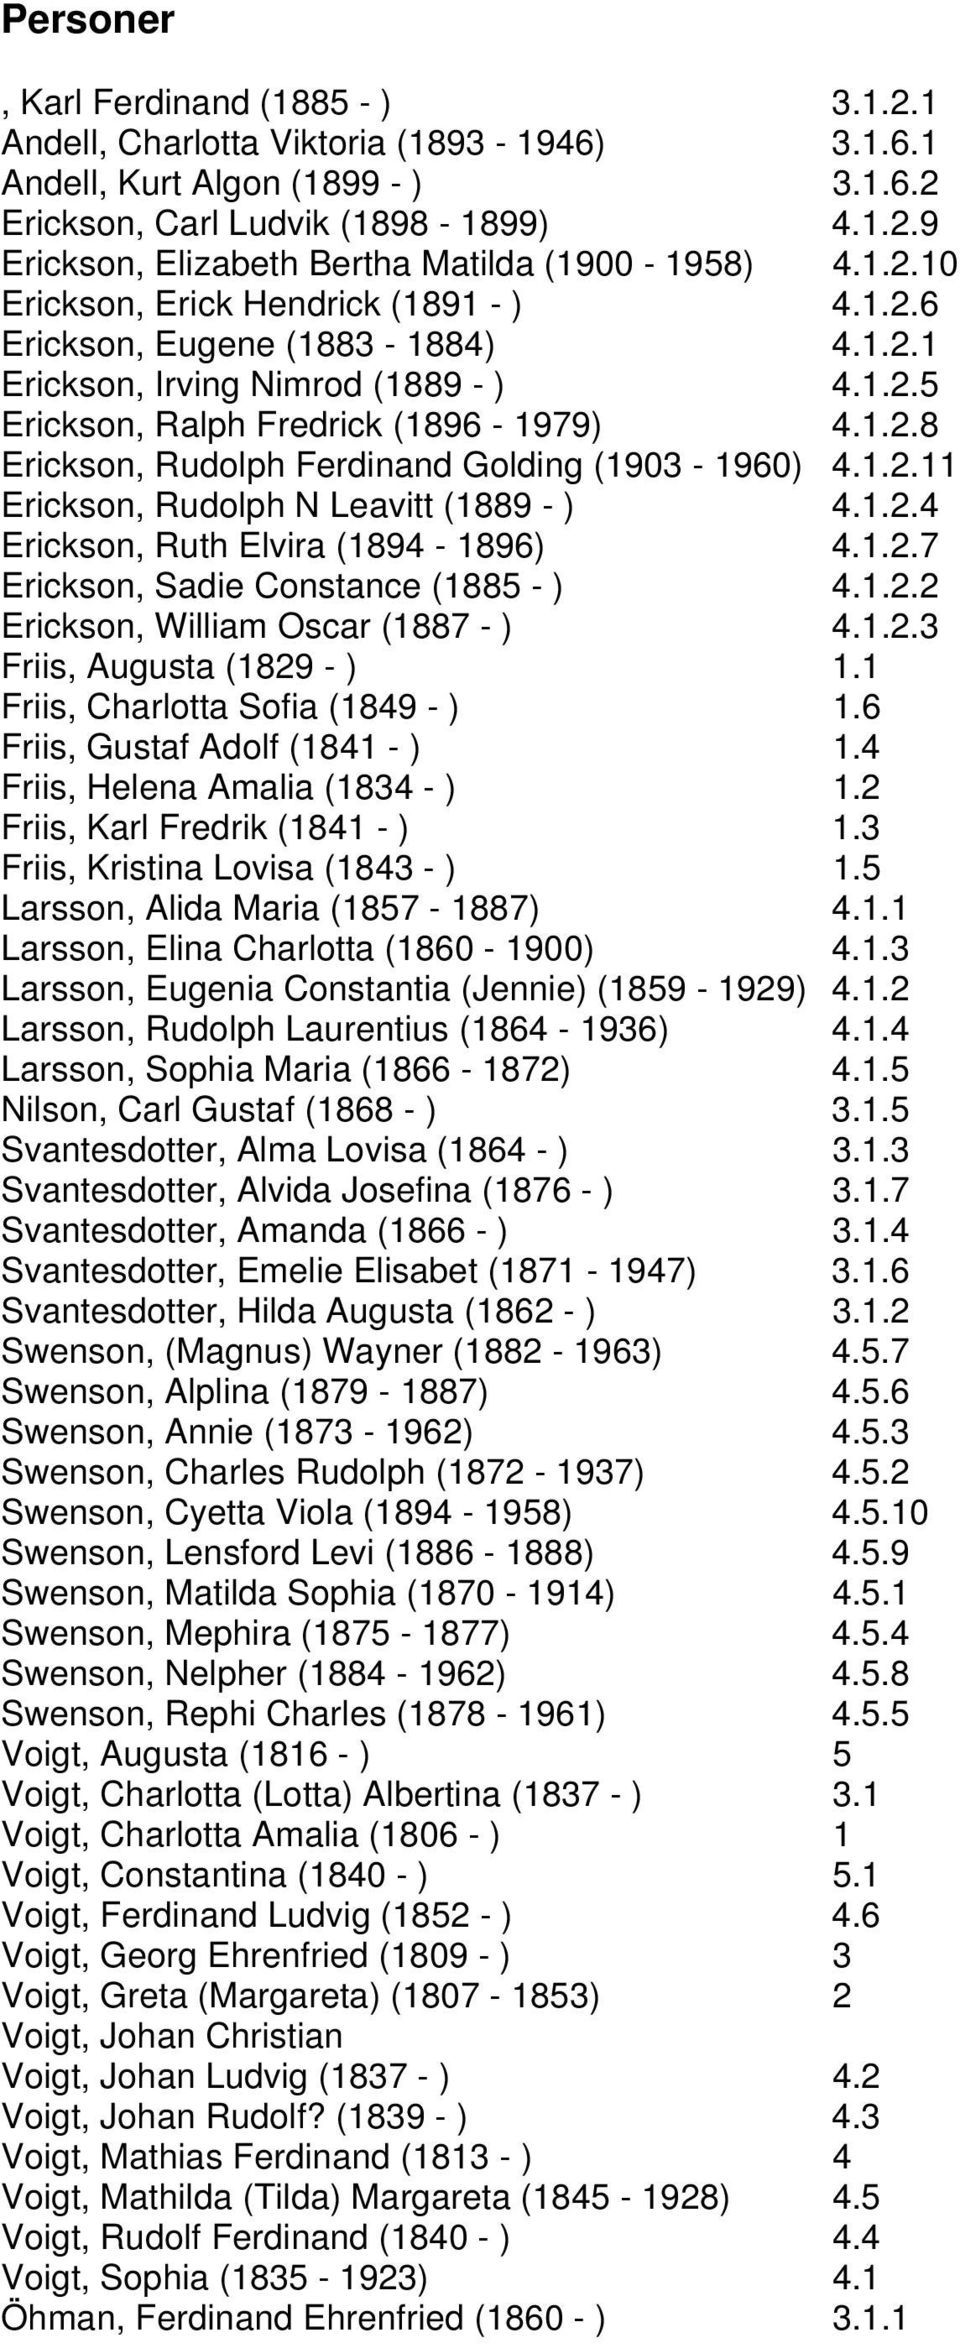 1.2.11 Erickson, Rudolph N Leavitt (1889 - ) 4.1.2.4 Erickson, Ruth Elvira (1894-1896) 4.1.2.7 Erickson, Sadie Constance (1885 - ) 4.1.2.2 Erickson, William Oscar (1887 - ) 4.1.2.3 Friis, Augusta (1829 - ) 1.